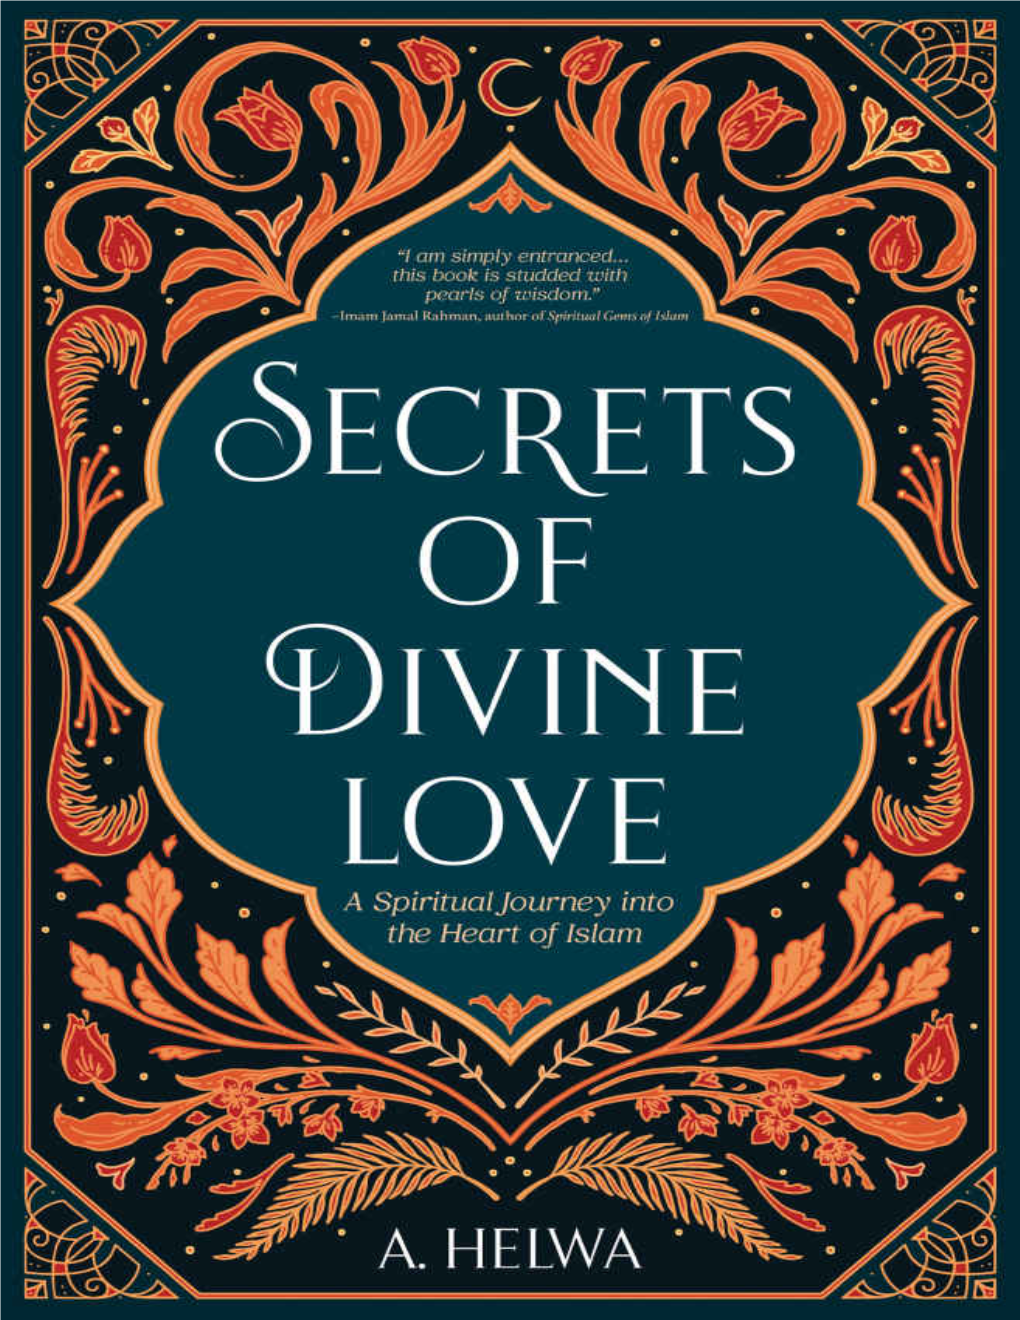 Secrets of Divine Love: a Spiritual Journey Into the Heart of Islam